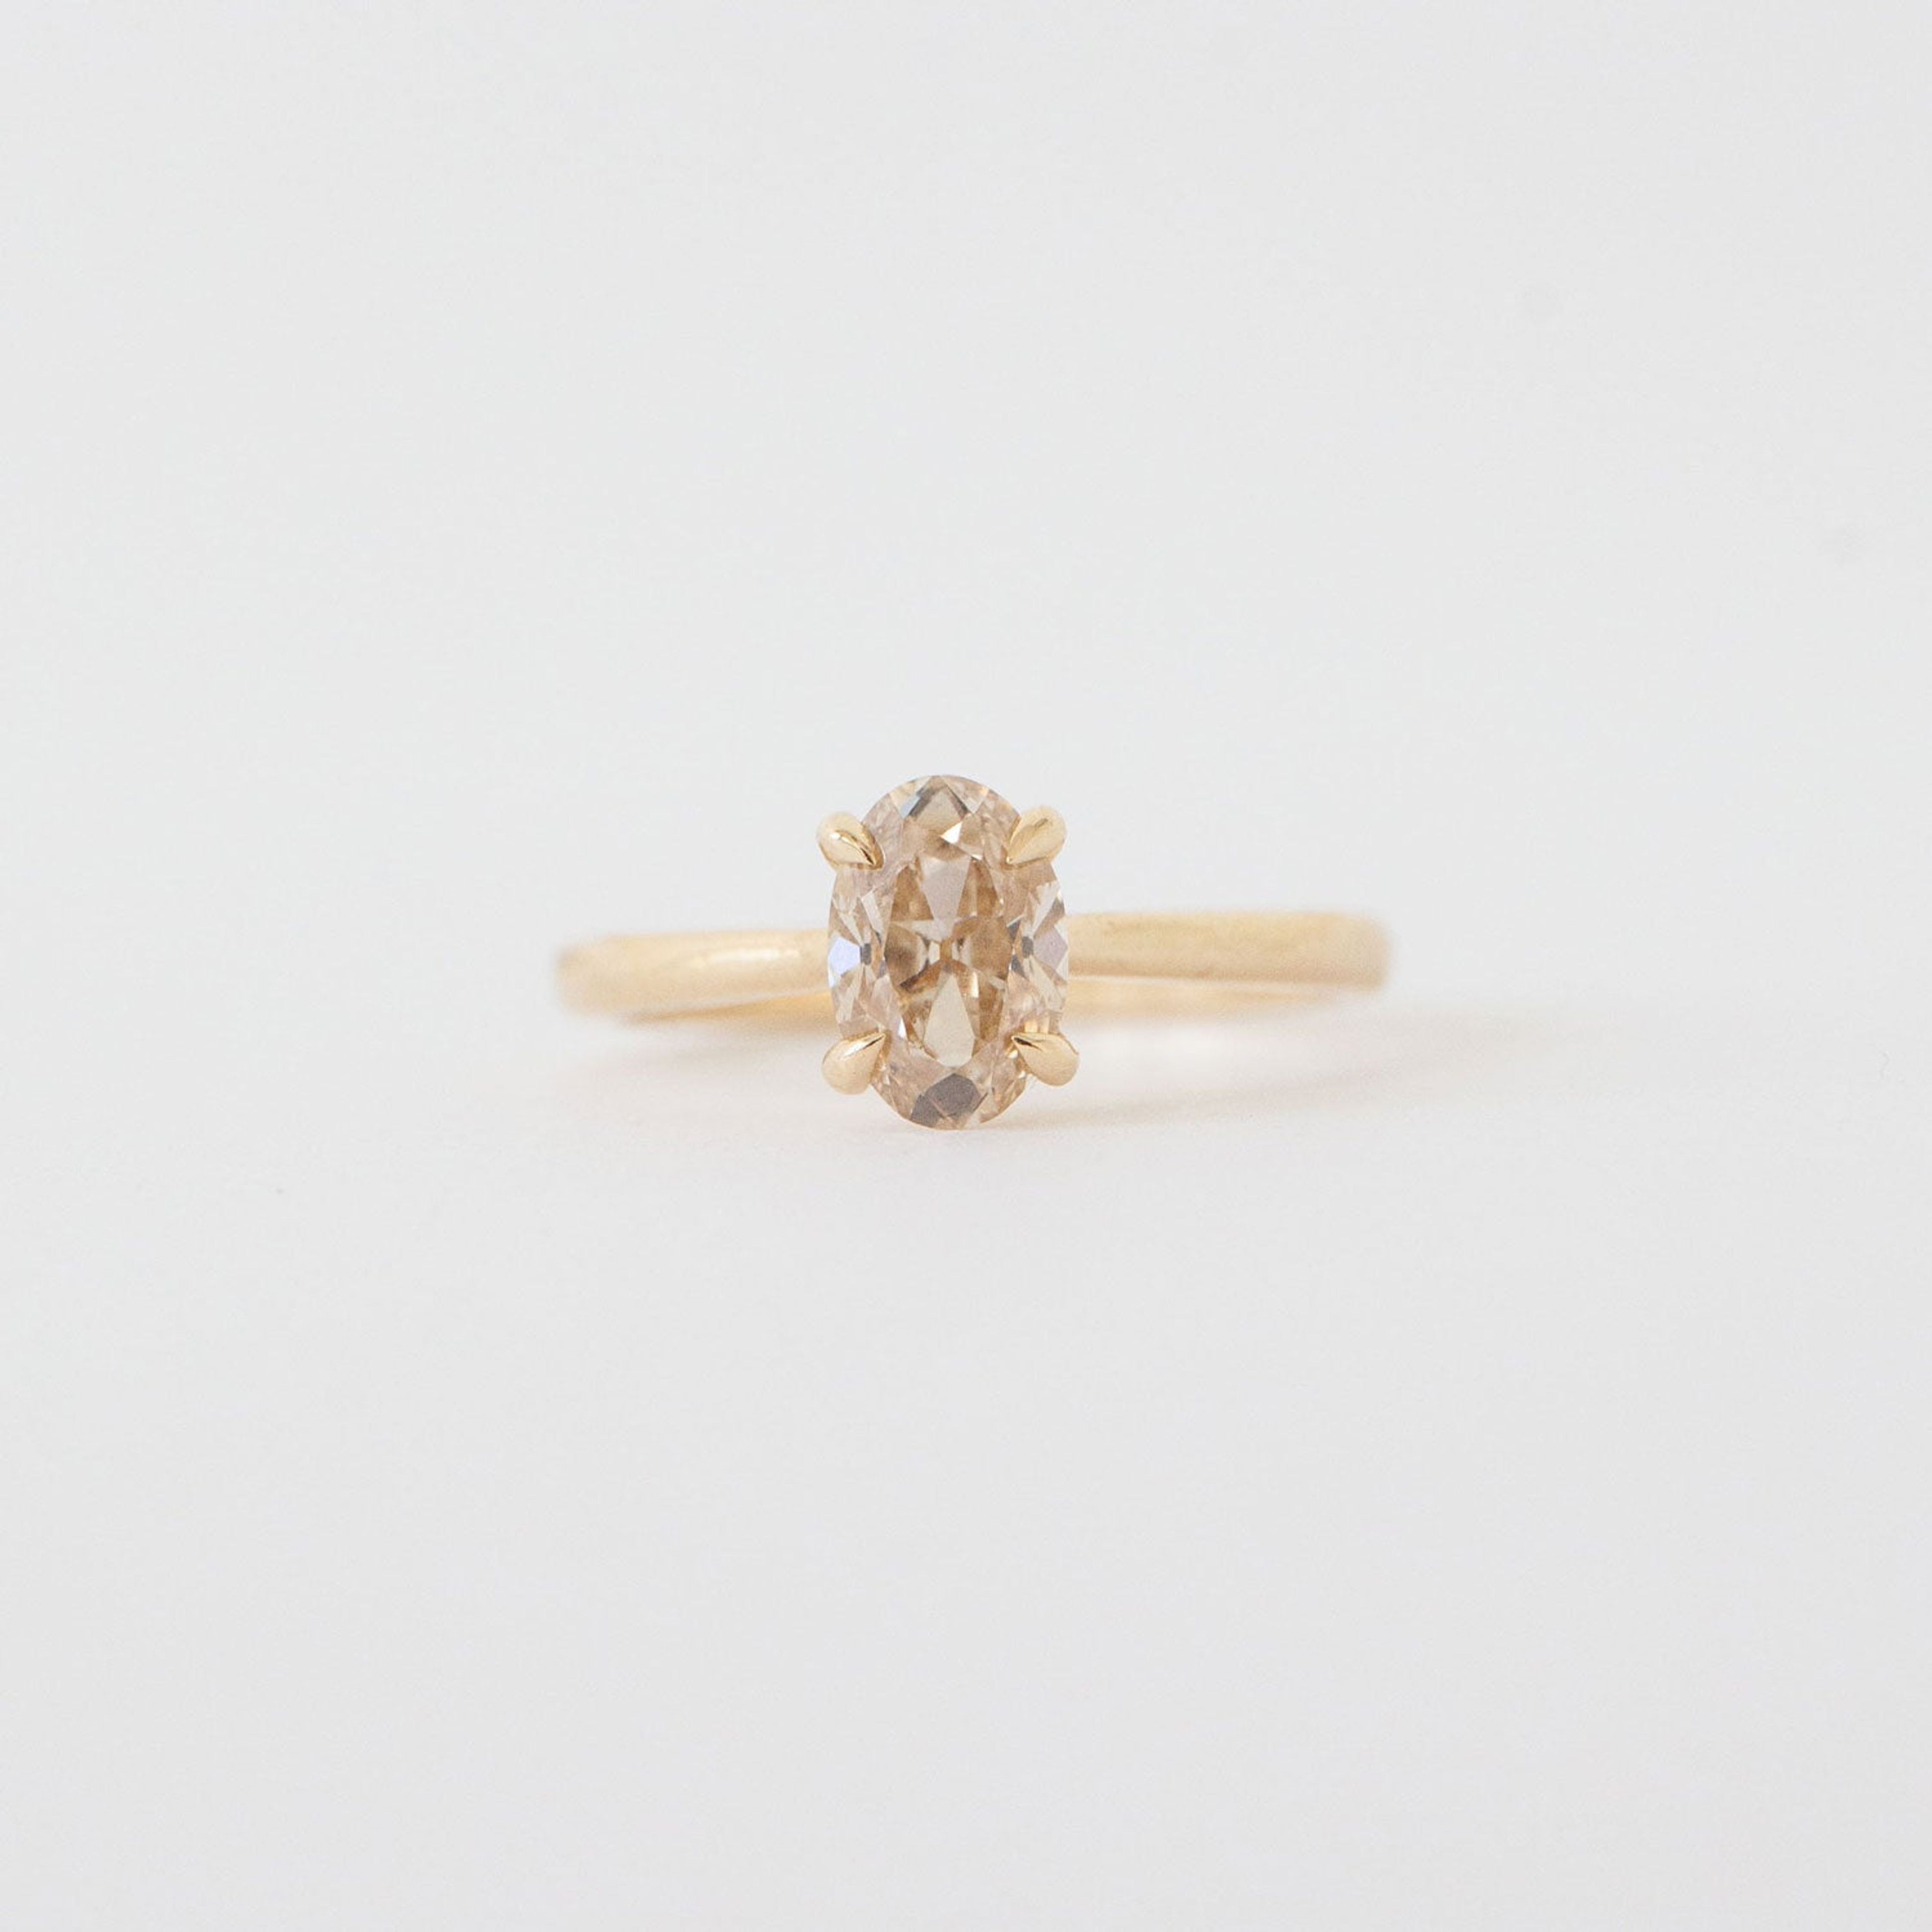 Celine Ring - Champagne Diamond